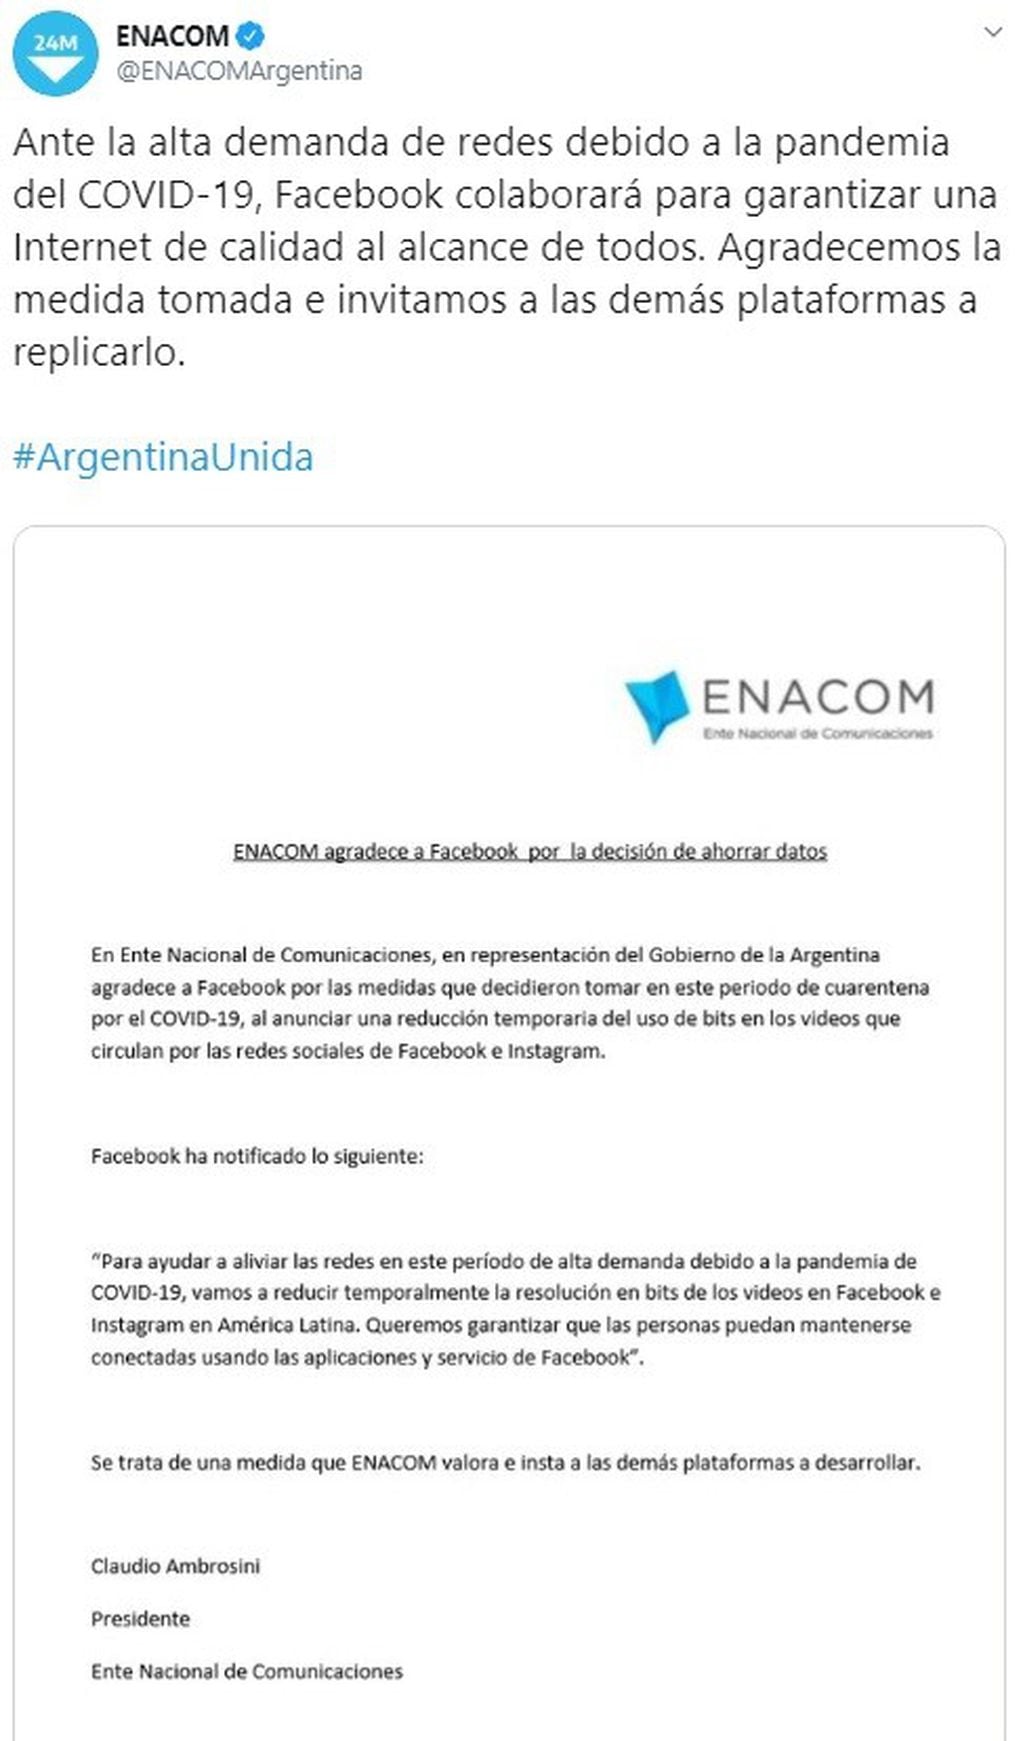 El comunicado oficial de Enacom. (Twitter)